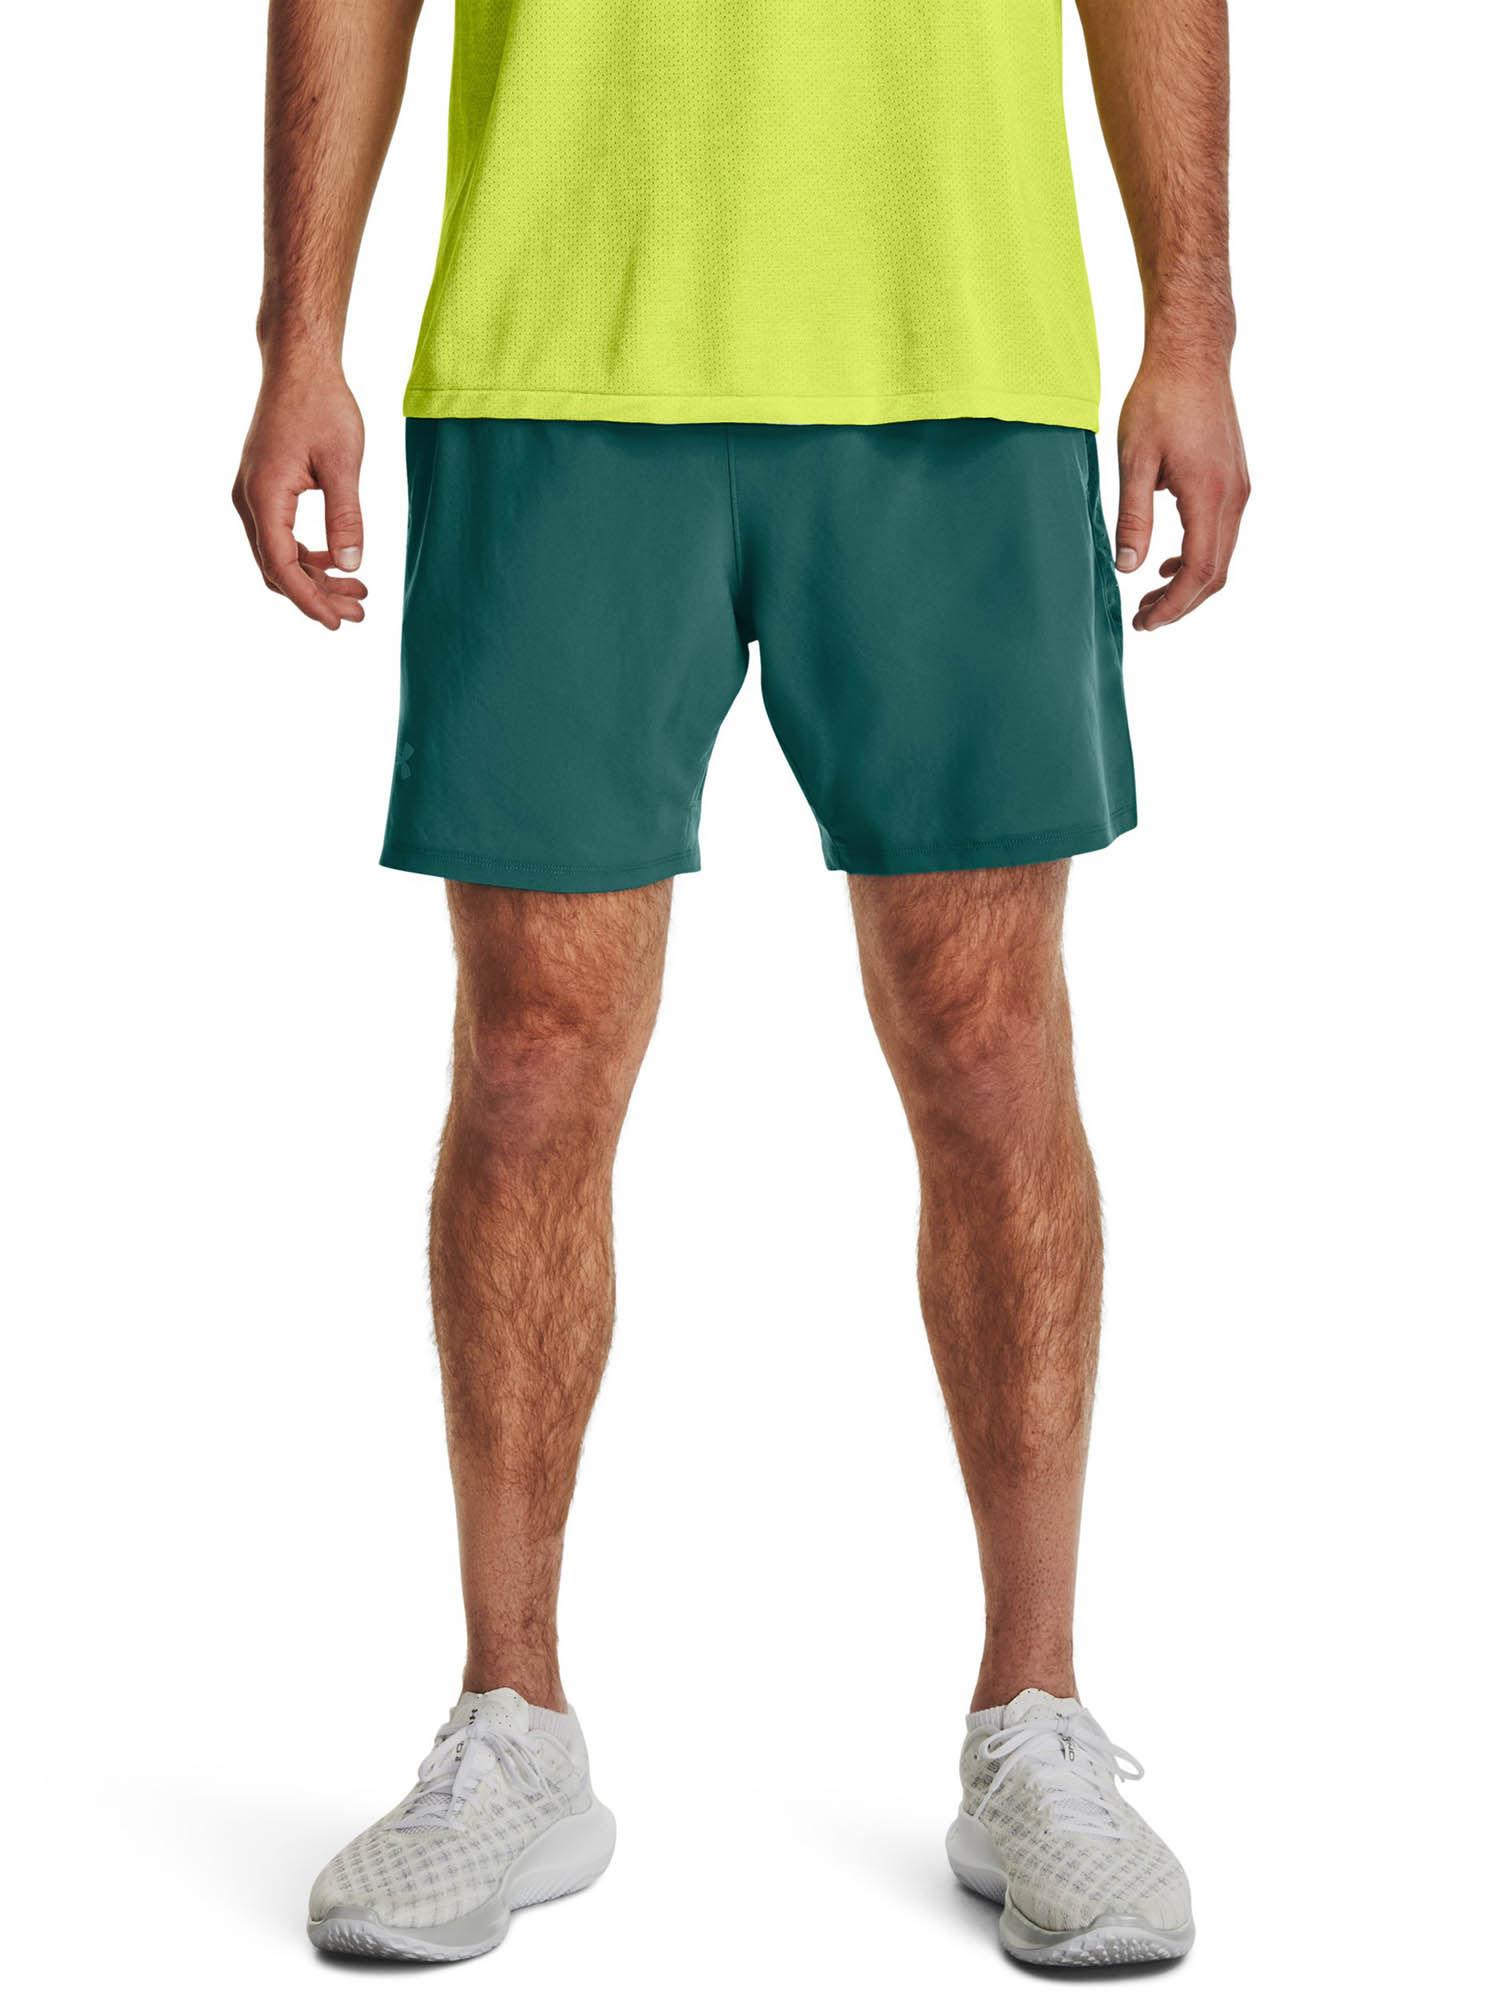 Launch Elite Shorts-Green